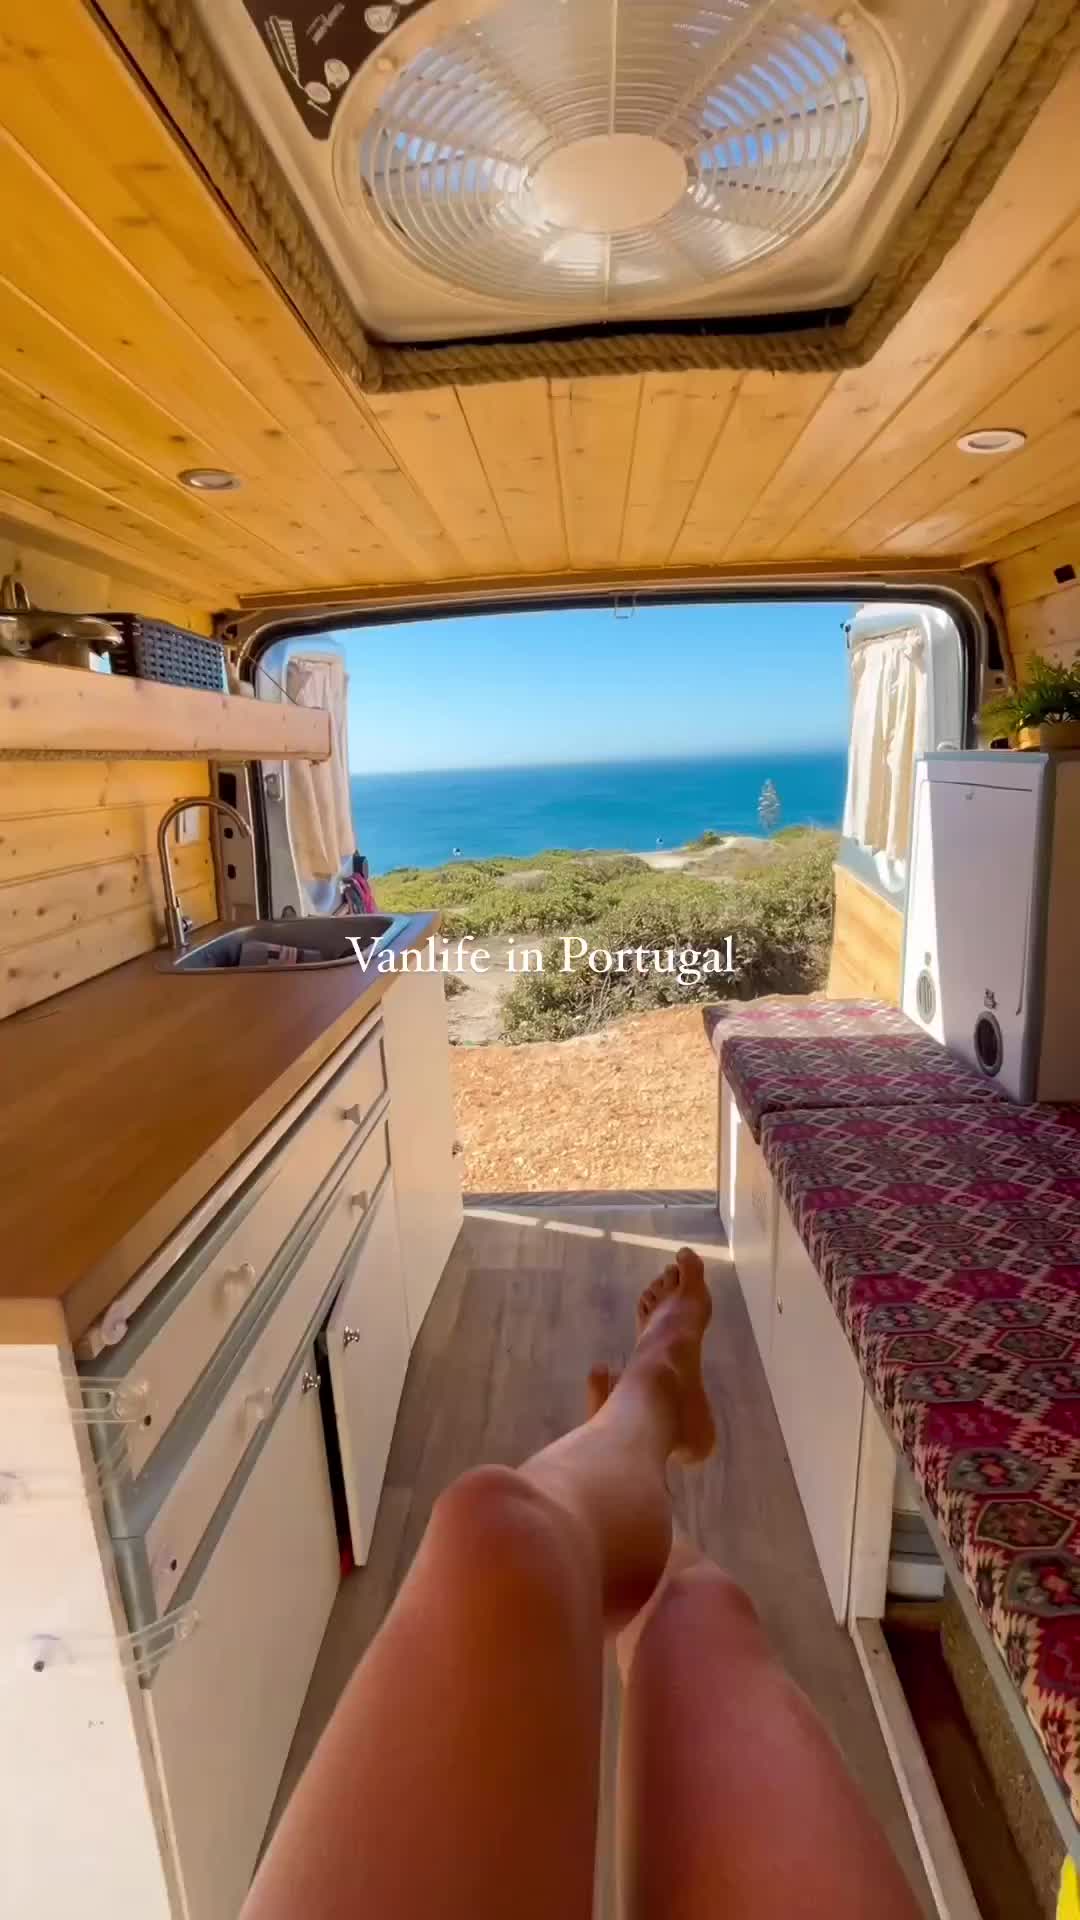 Dream Van Journey Along Portugal's Stunning Coastline